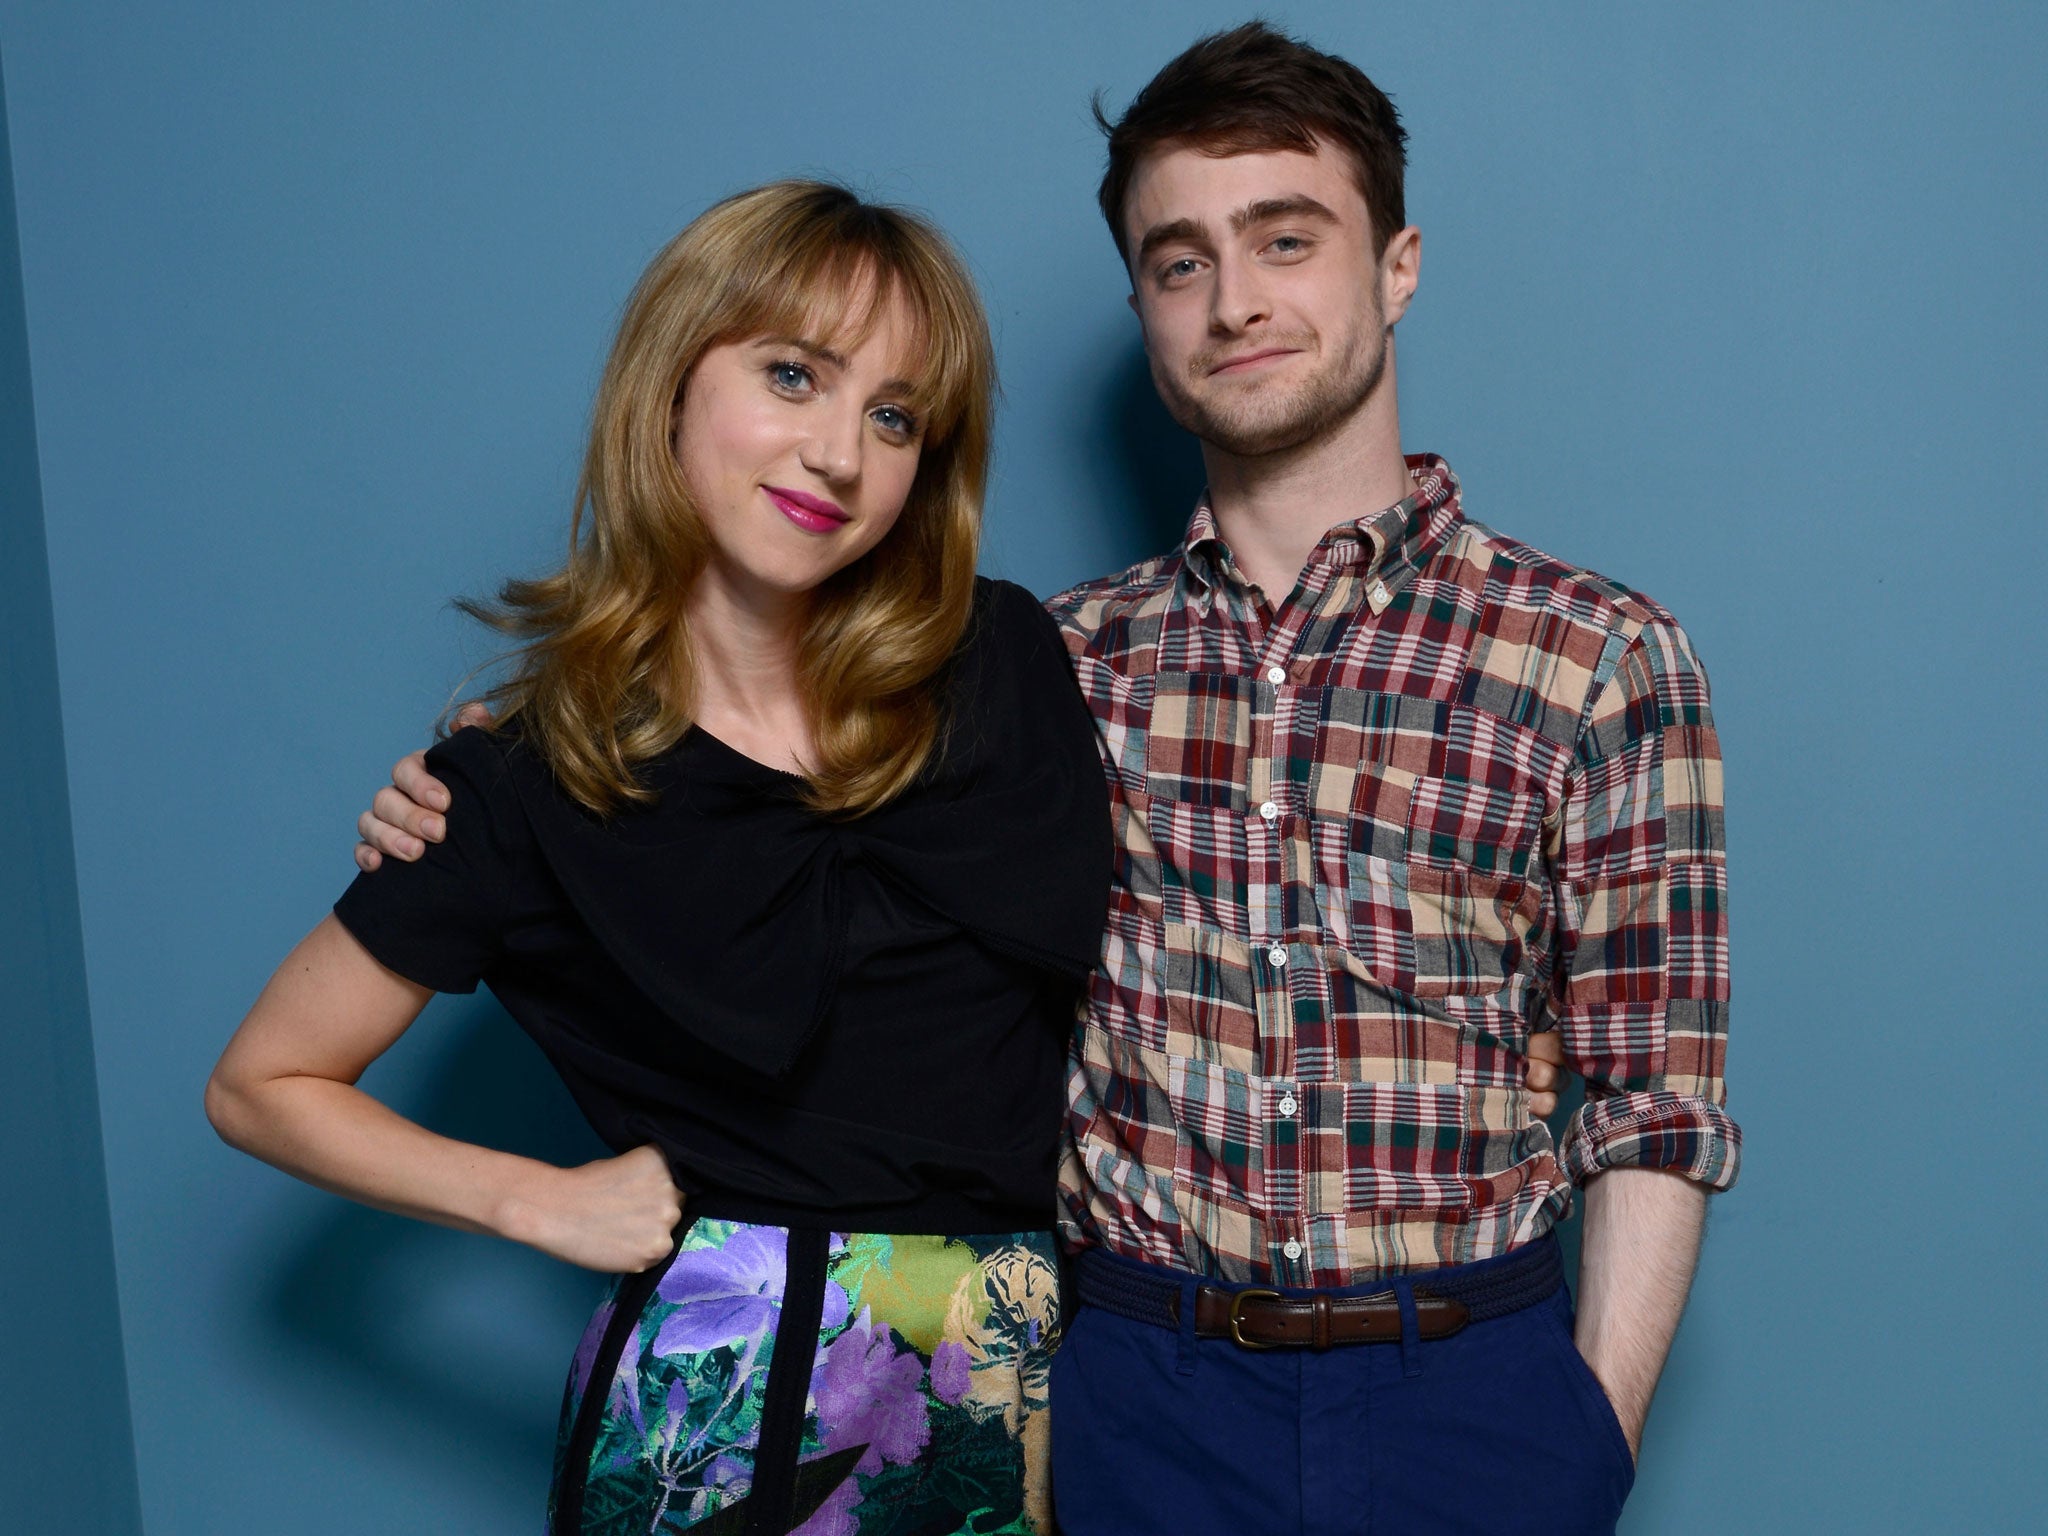 Co-stars Zoe Kazan and actor Daniel Radcliffe at the 2013 Toronto International Film Festival